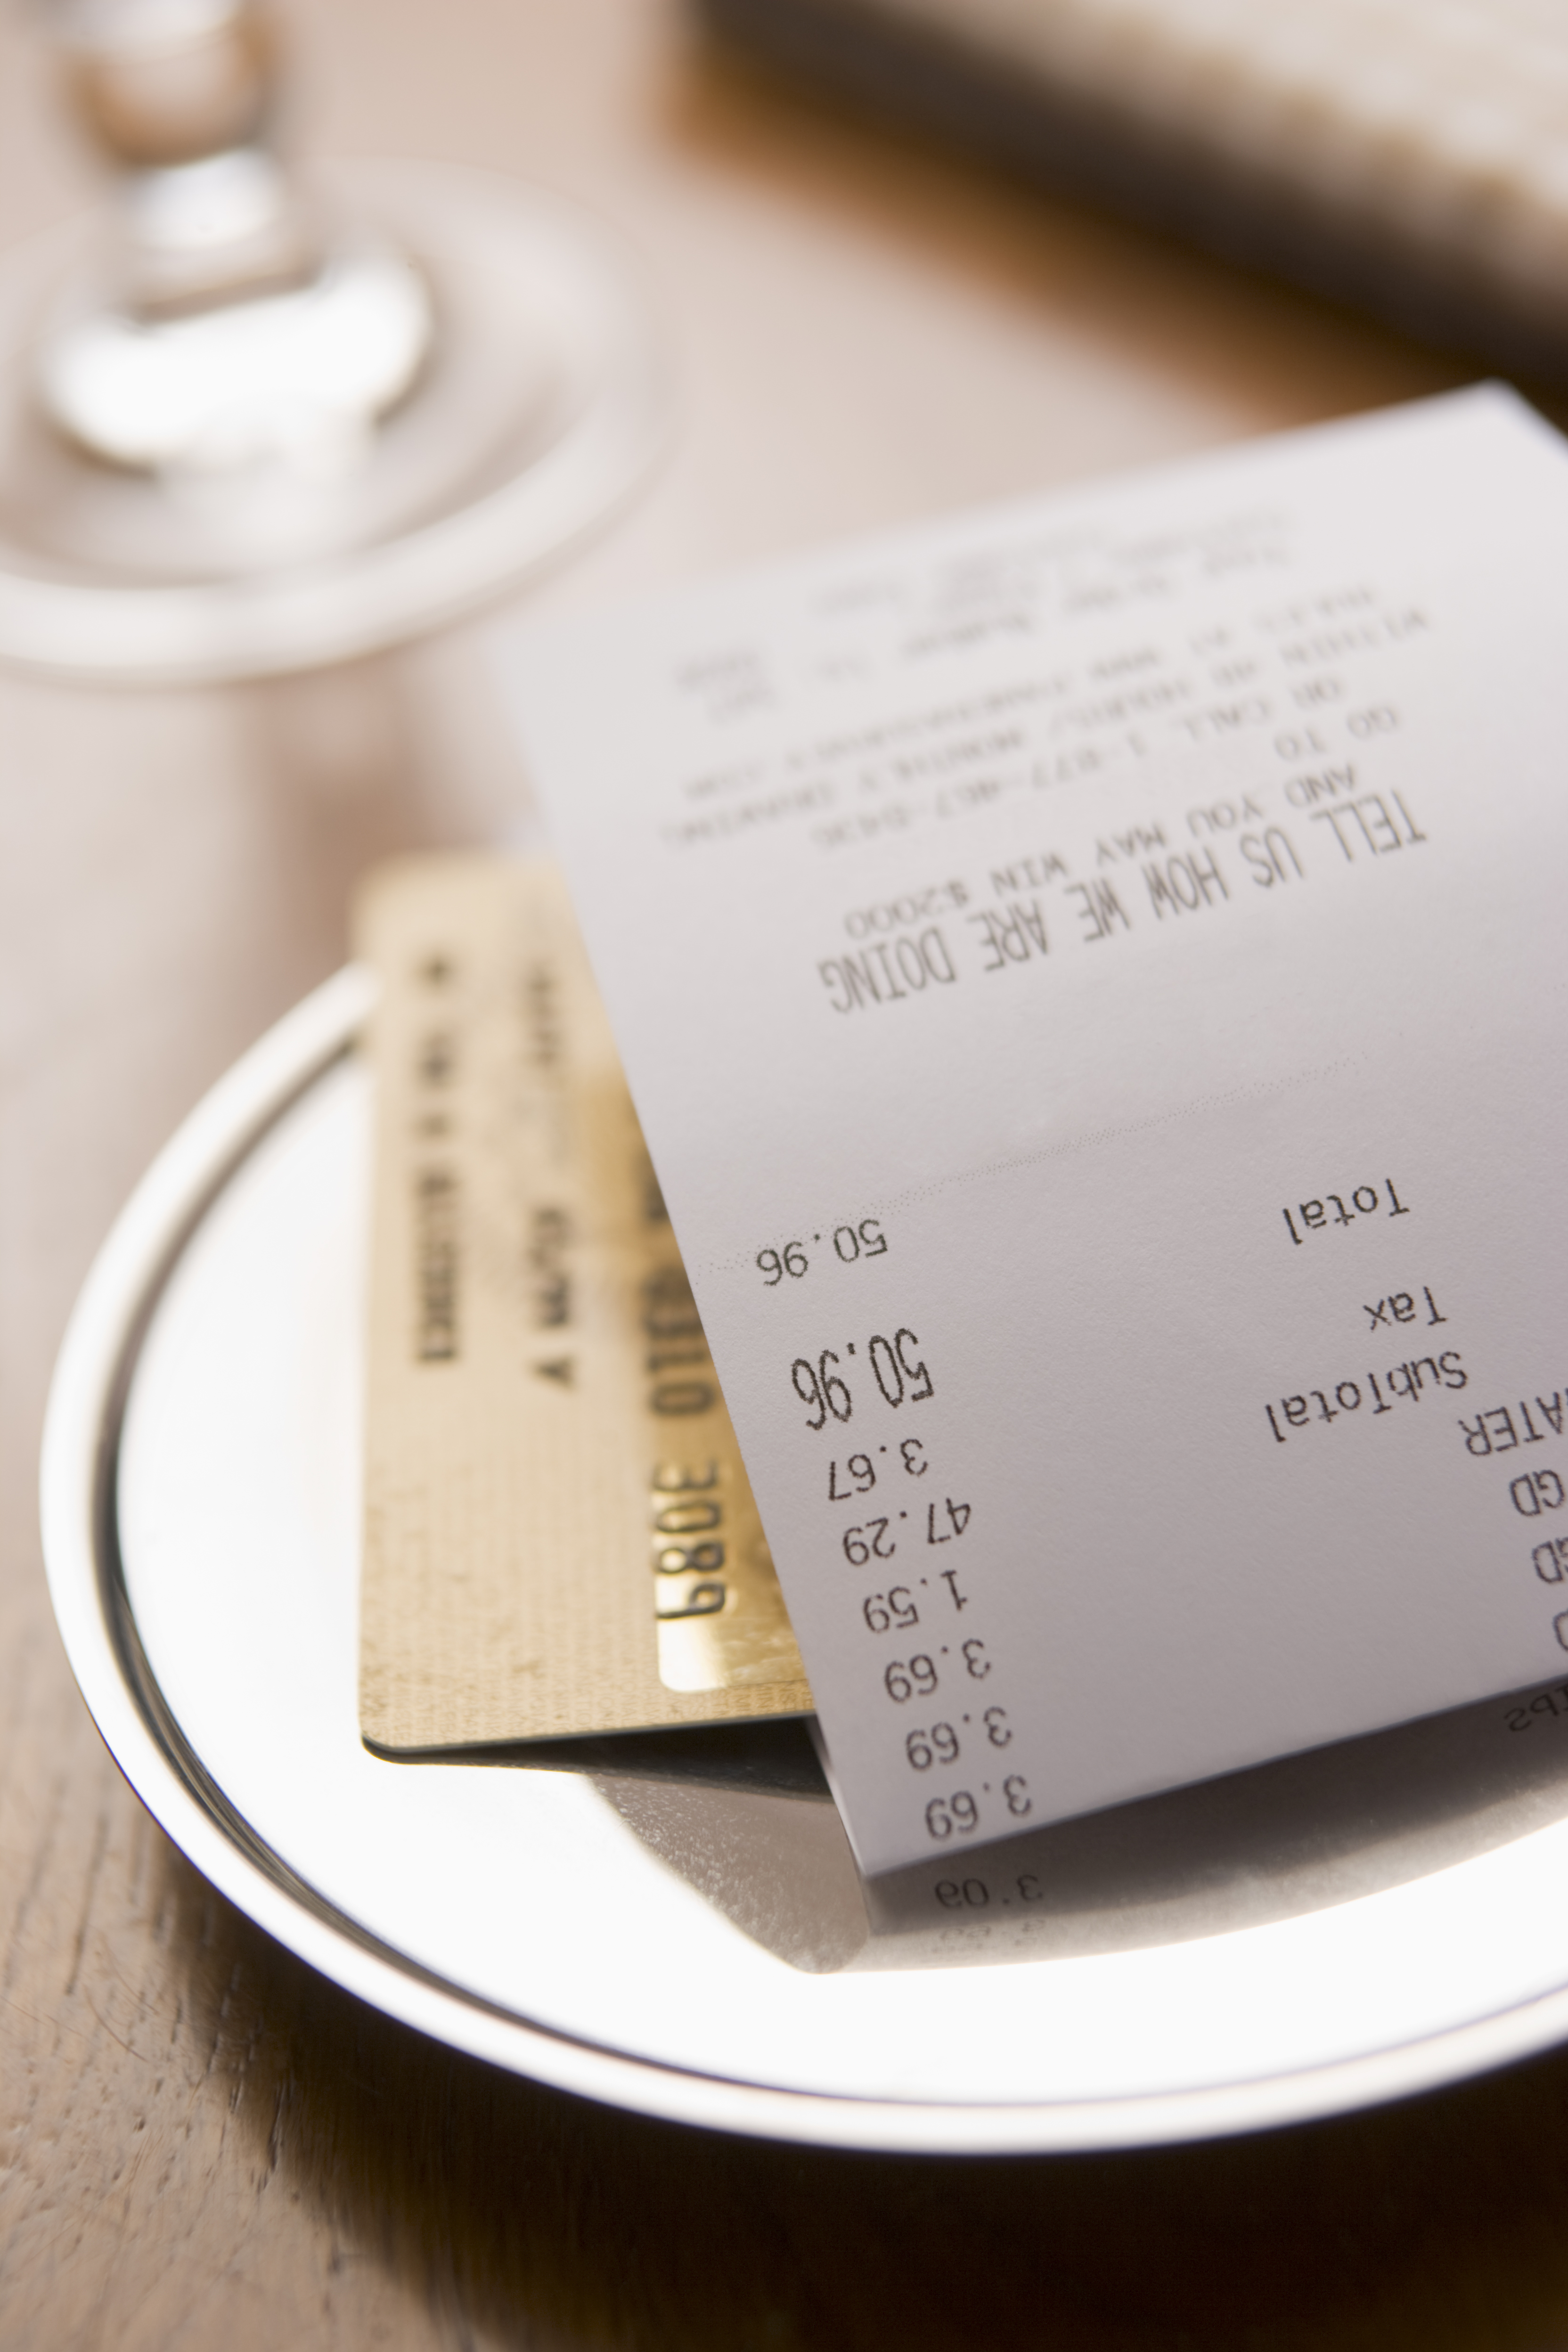 A restaurant bill and credit card | Source: Shutterstock